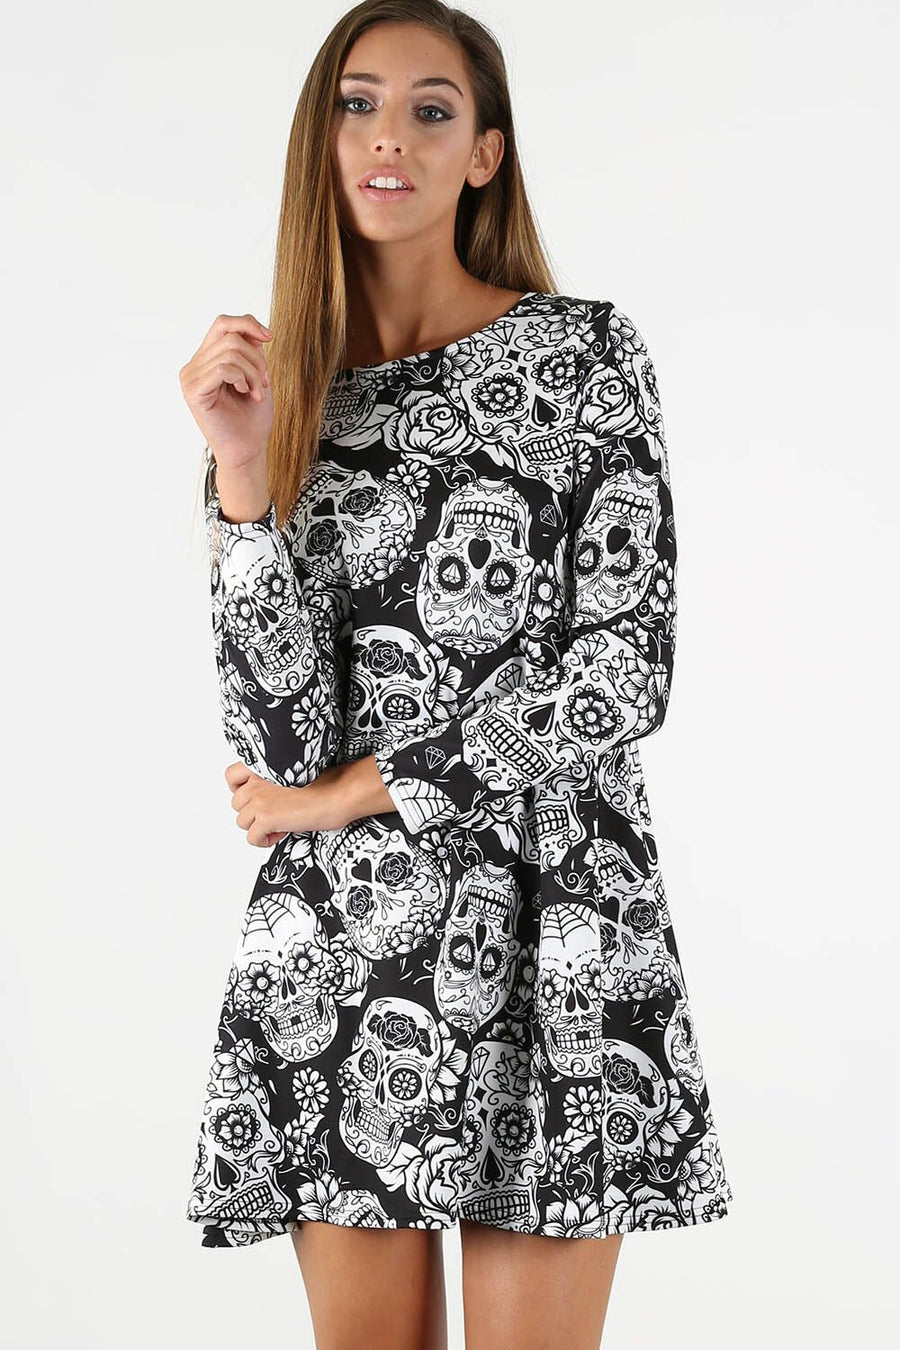 Long Sleeve Skull Print Halloween Dress - bejealous-com